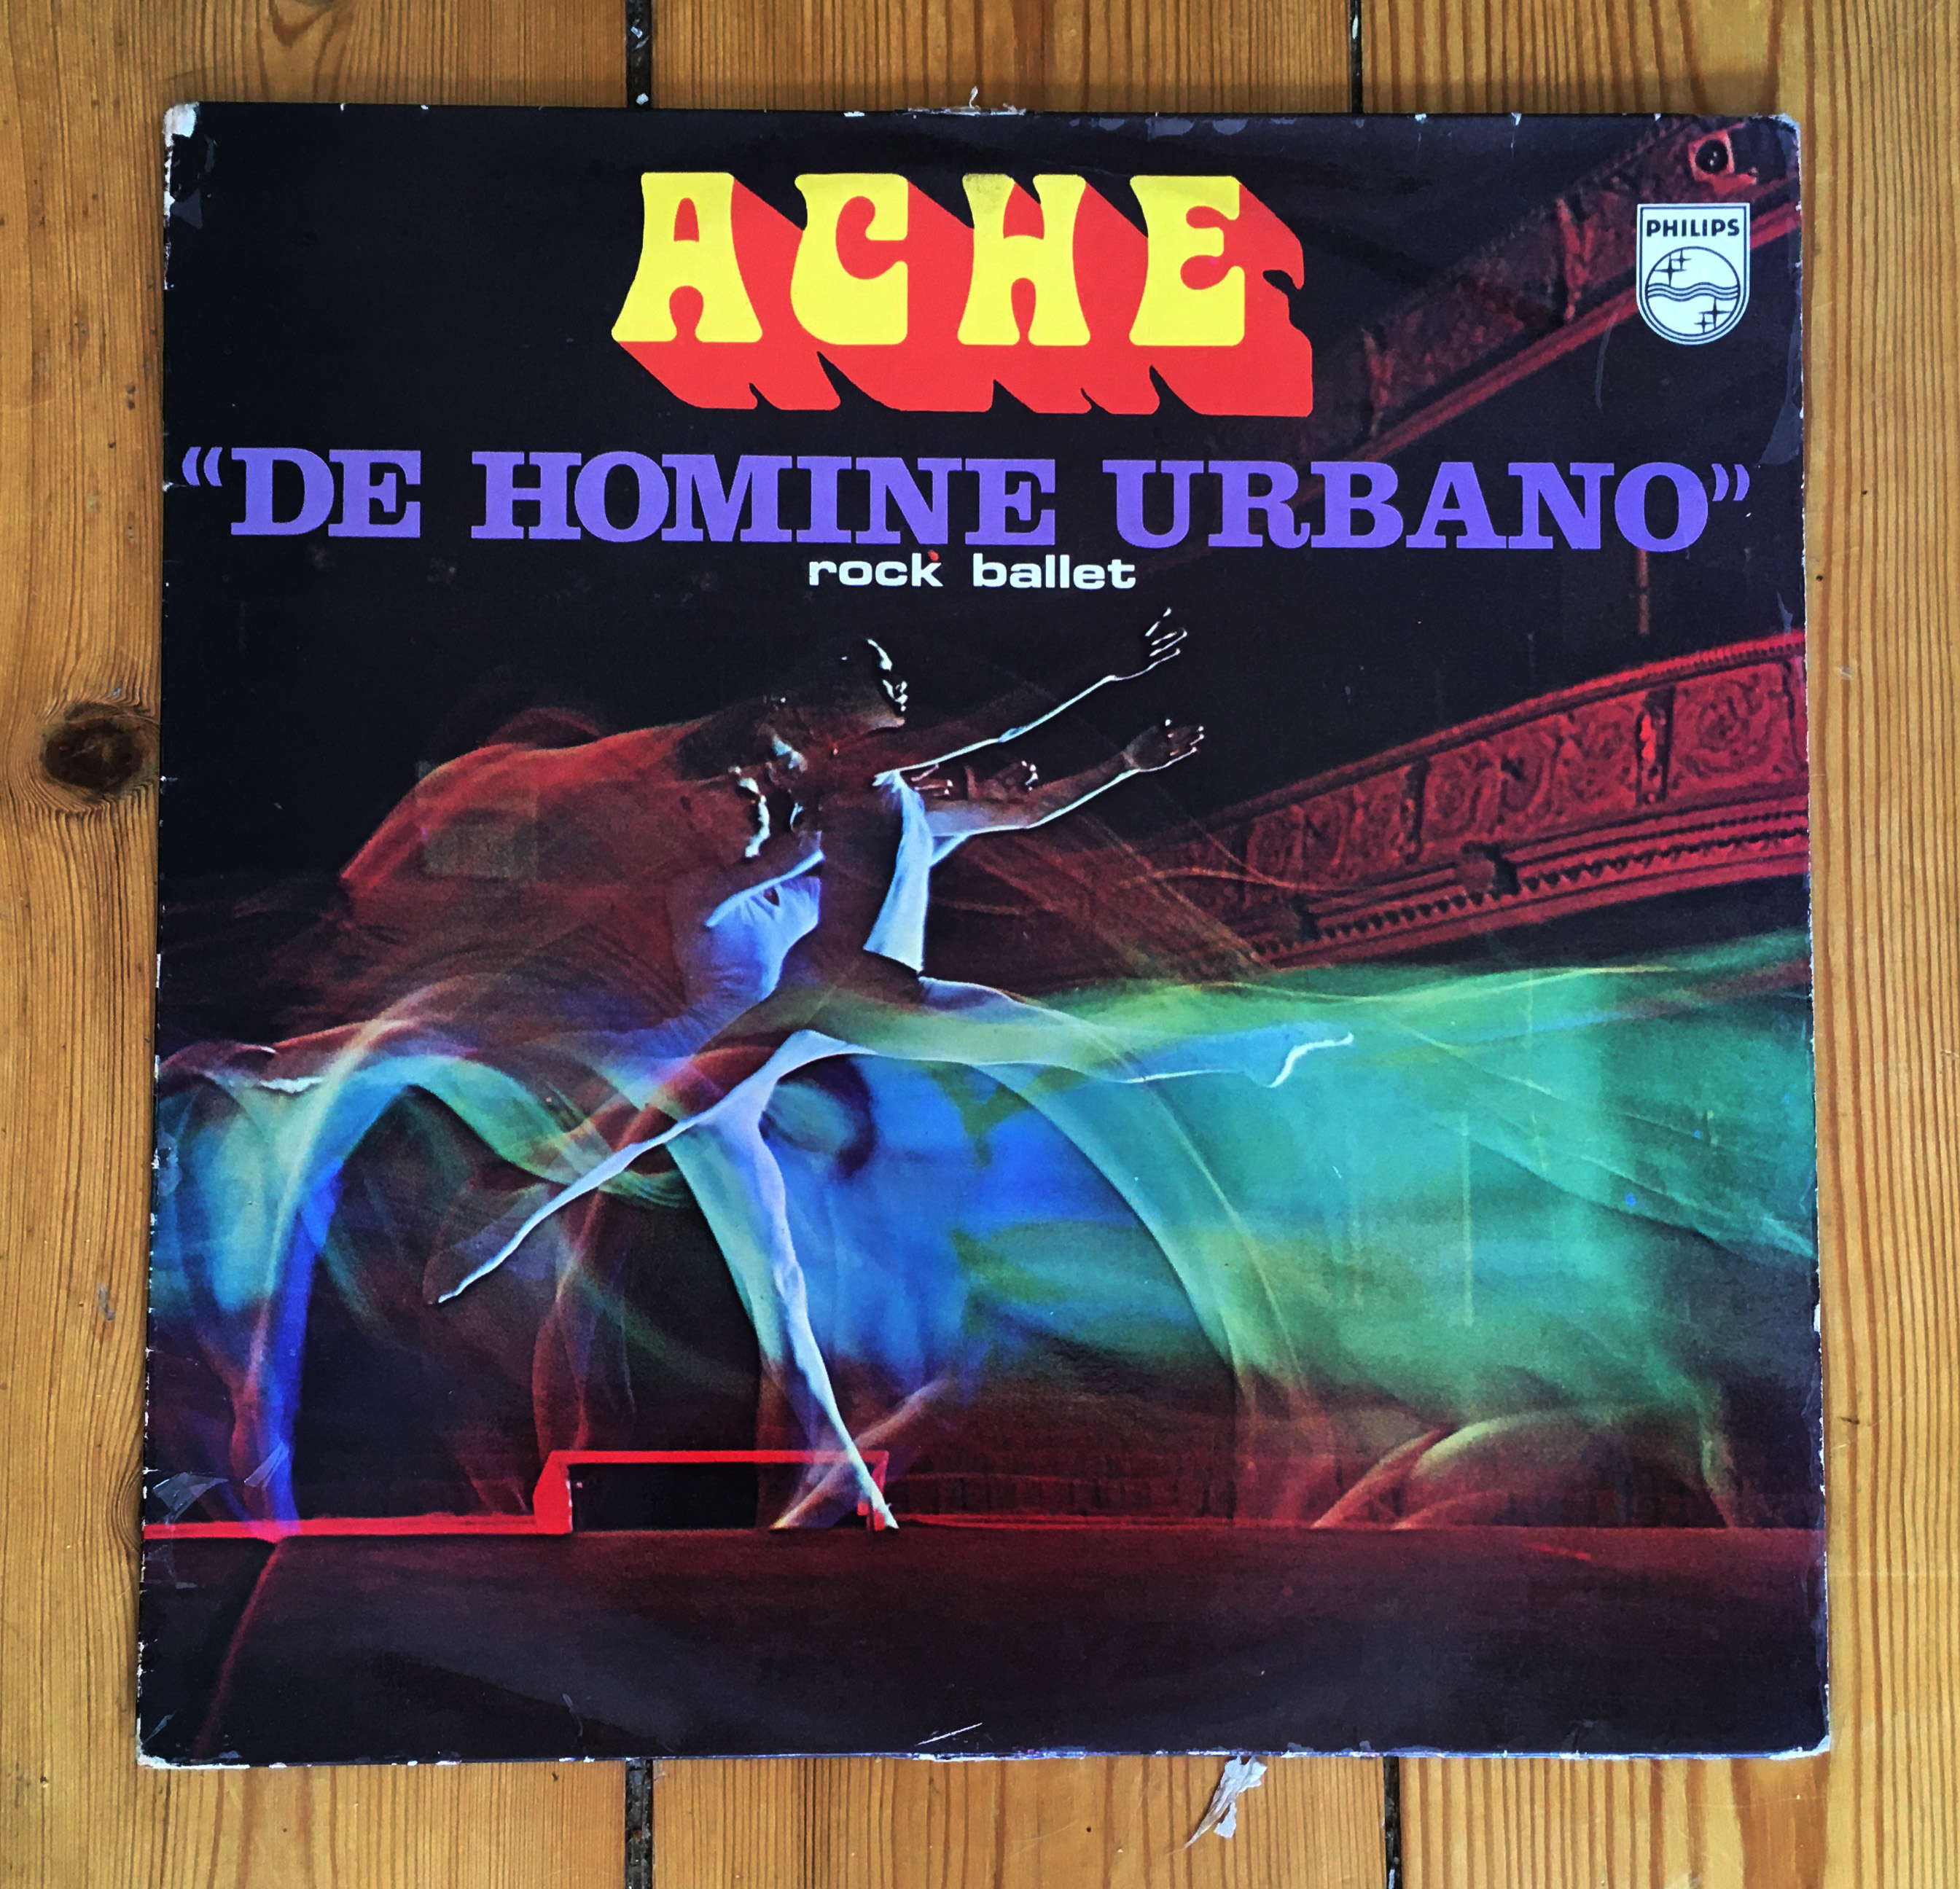 De Homine Urbano, ACHE's first LP album, 1970 - French vinyl LP version cover front